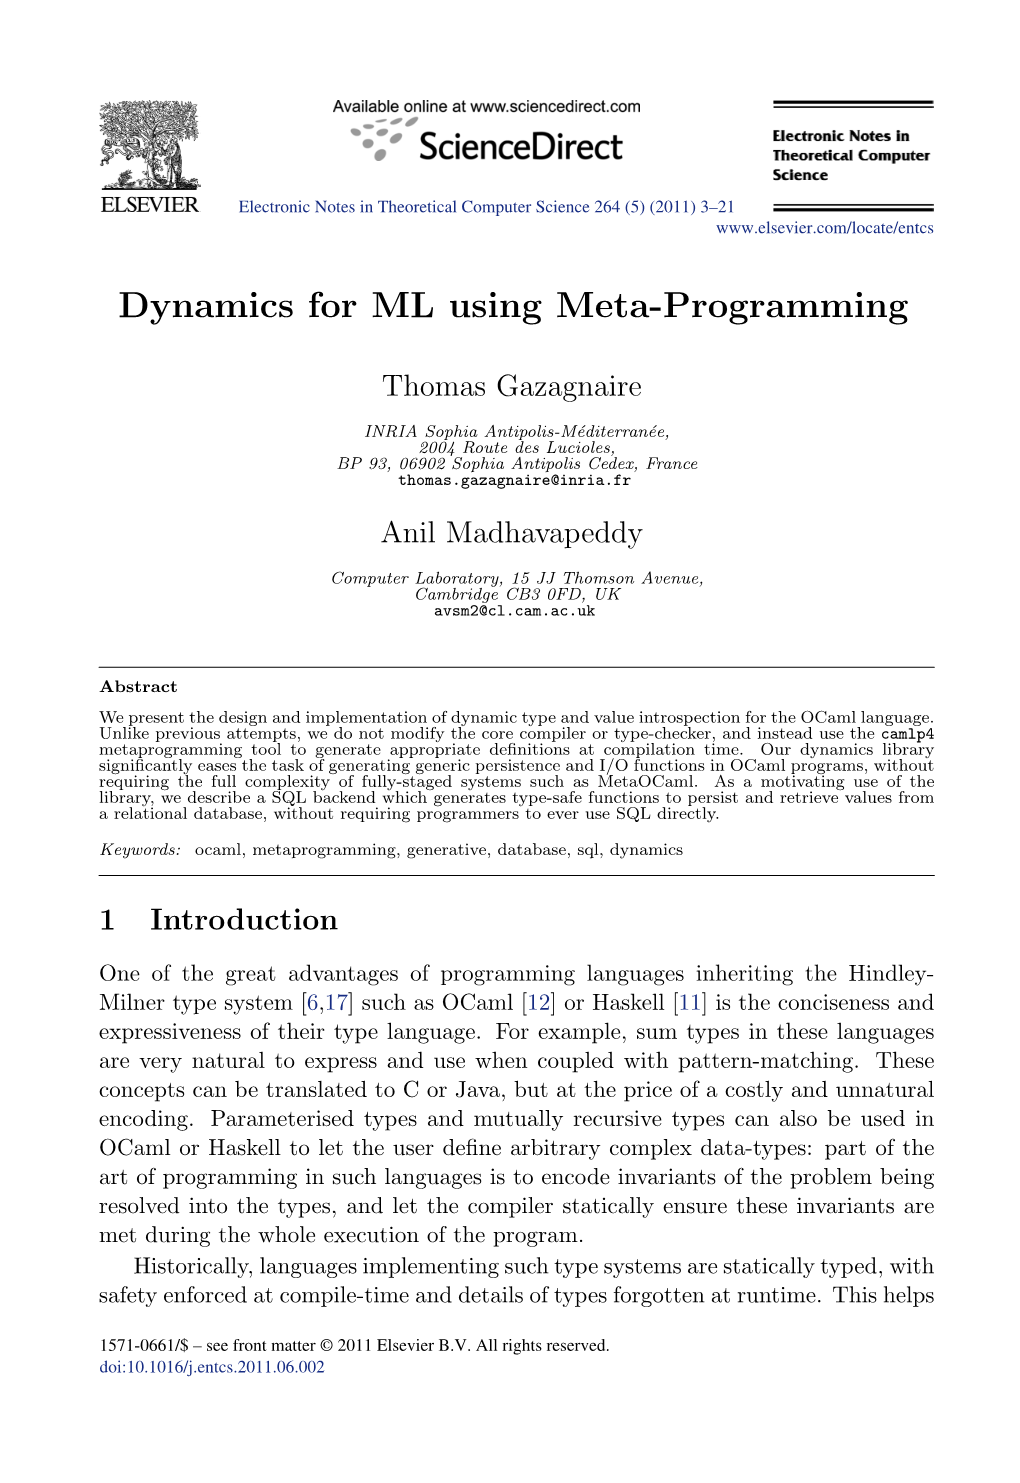 Dynamics for ML Using Meta-Programming